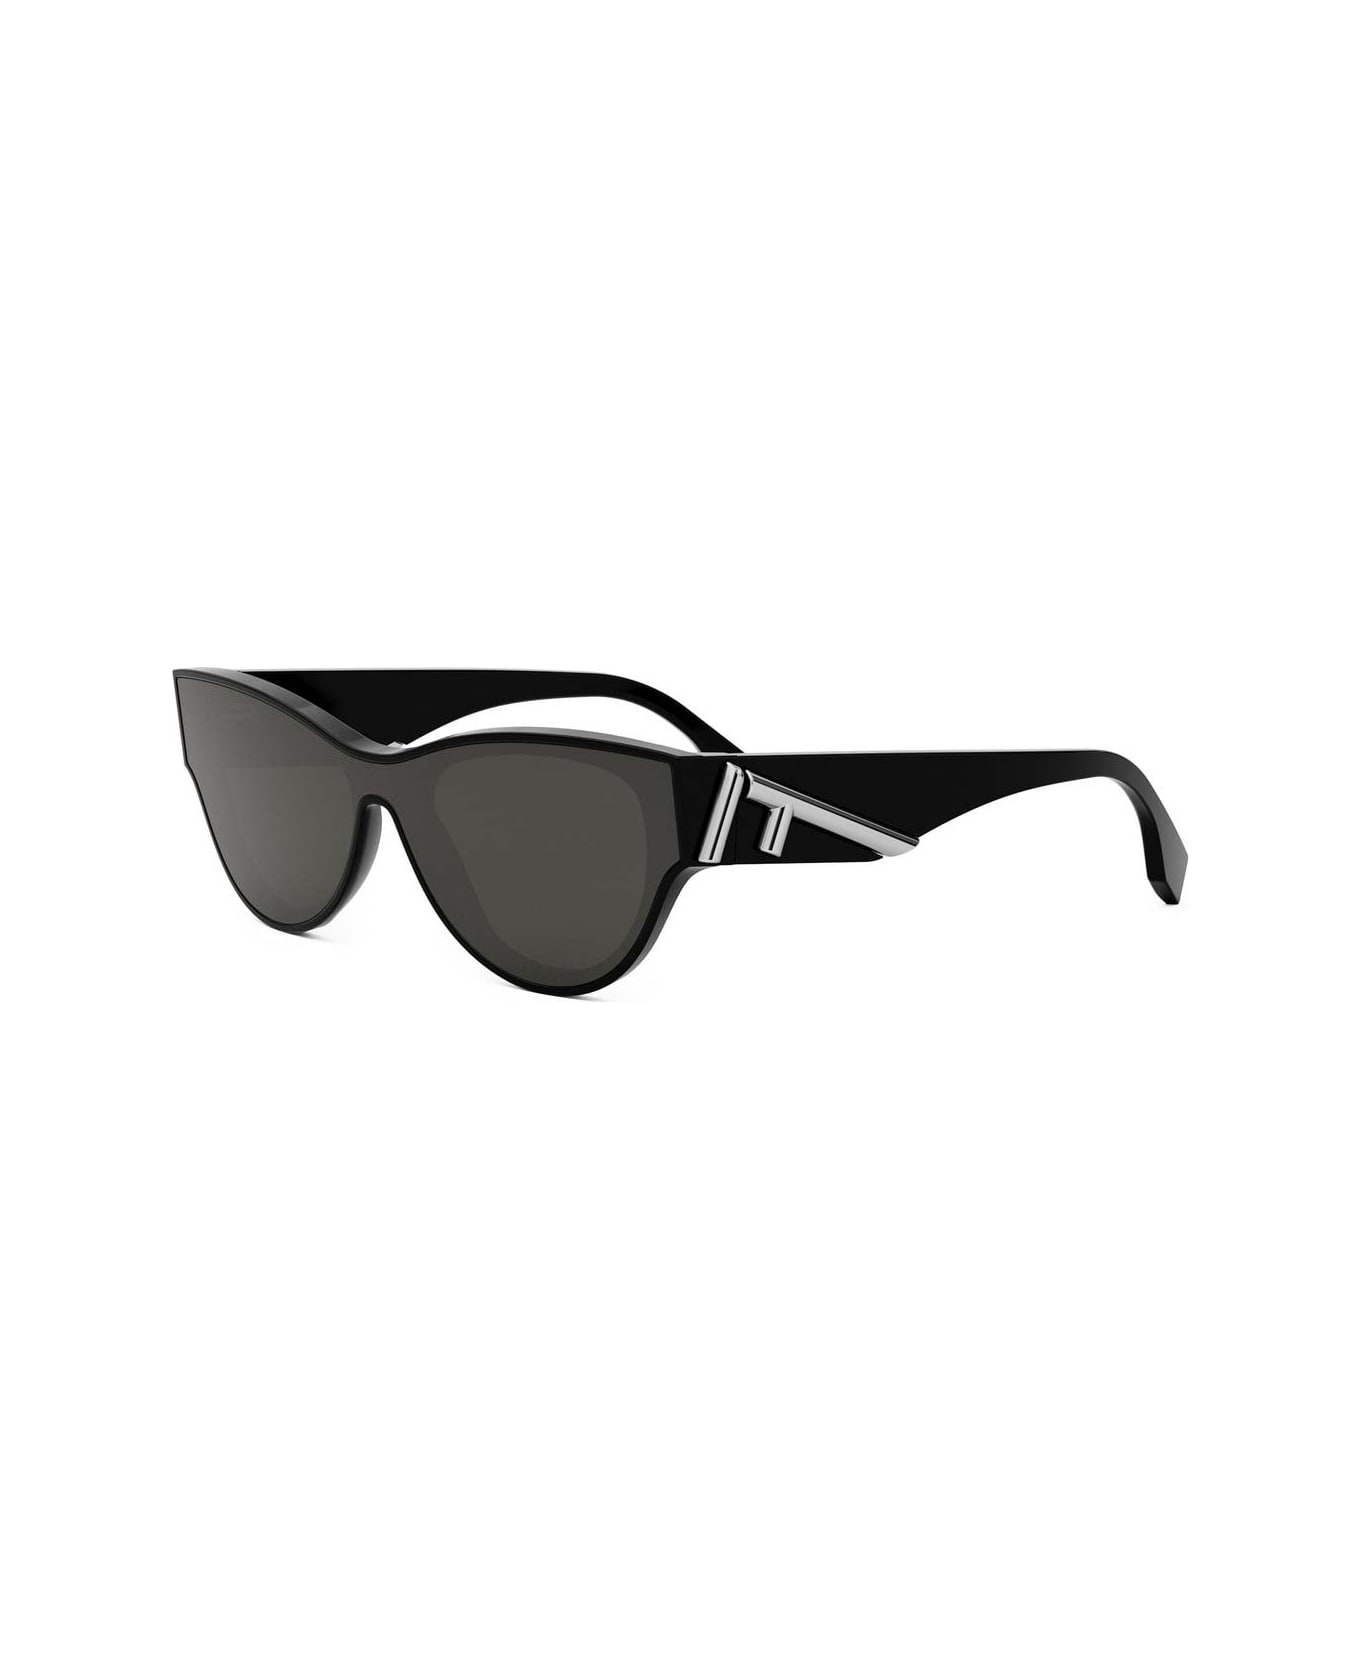 Fendi Eyewear Sunglasses - Nero/Nero サングラス